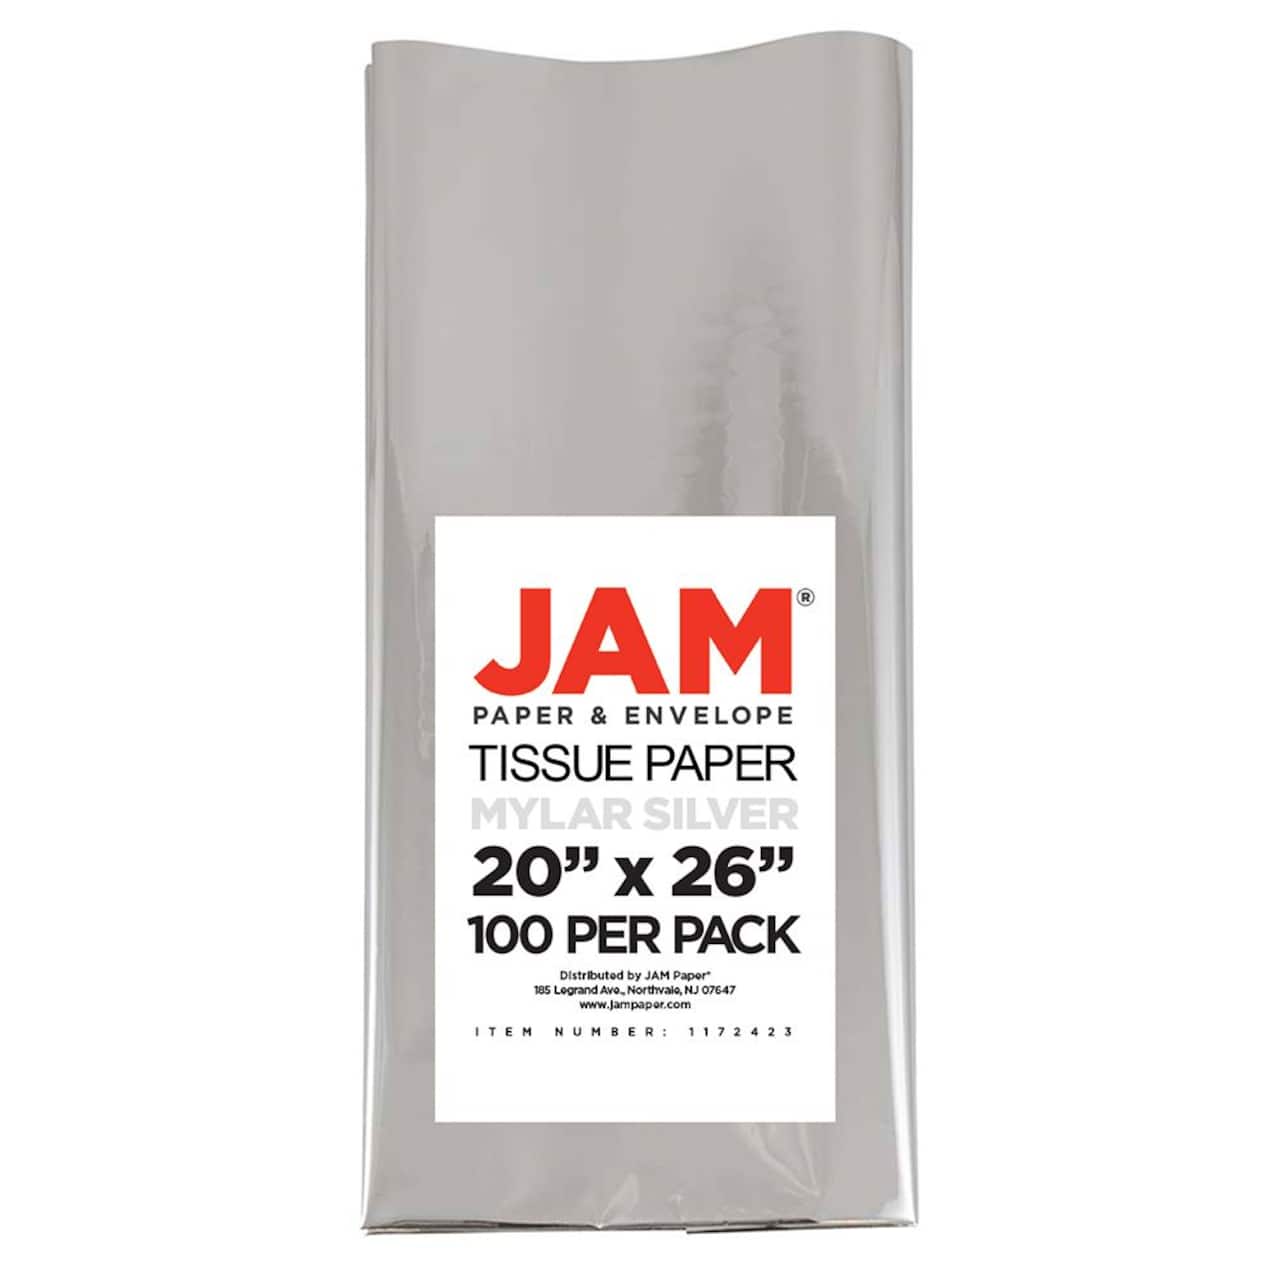 JAM Paper Silver Mylar Tissue Paper, 1000 Sheets